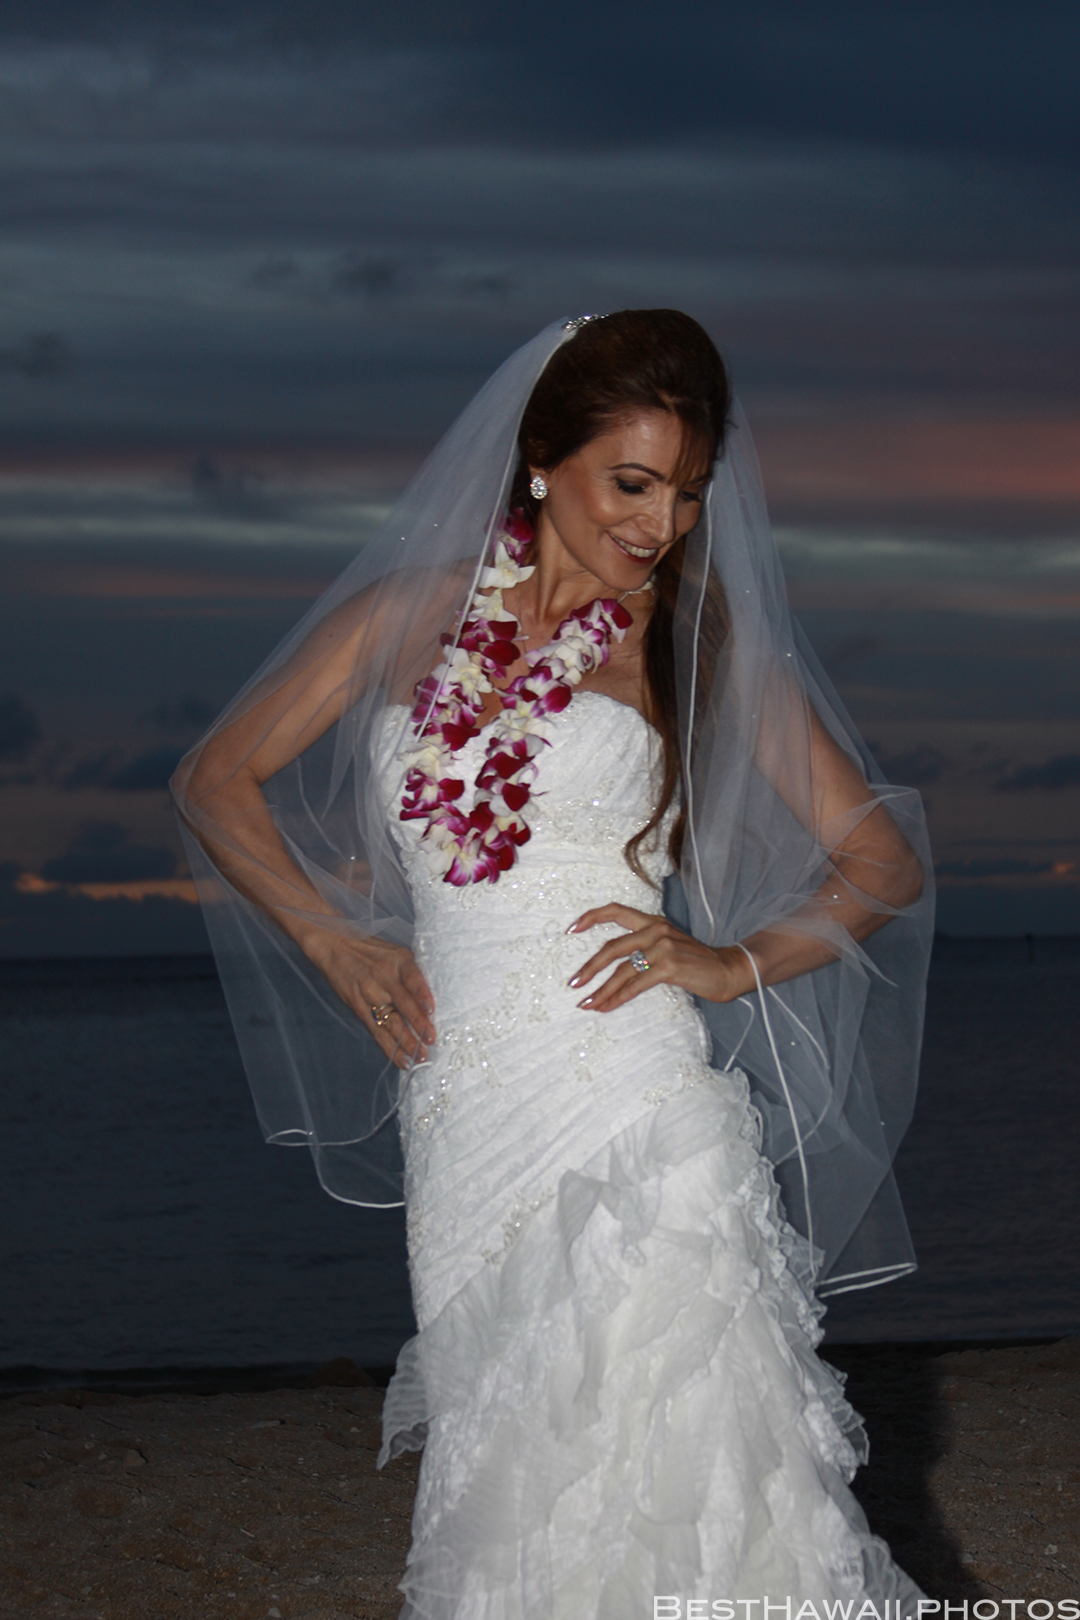 Sunset Wedding Photos in Waikiki by Pasha www.BestHawaii.photos 121820158701